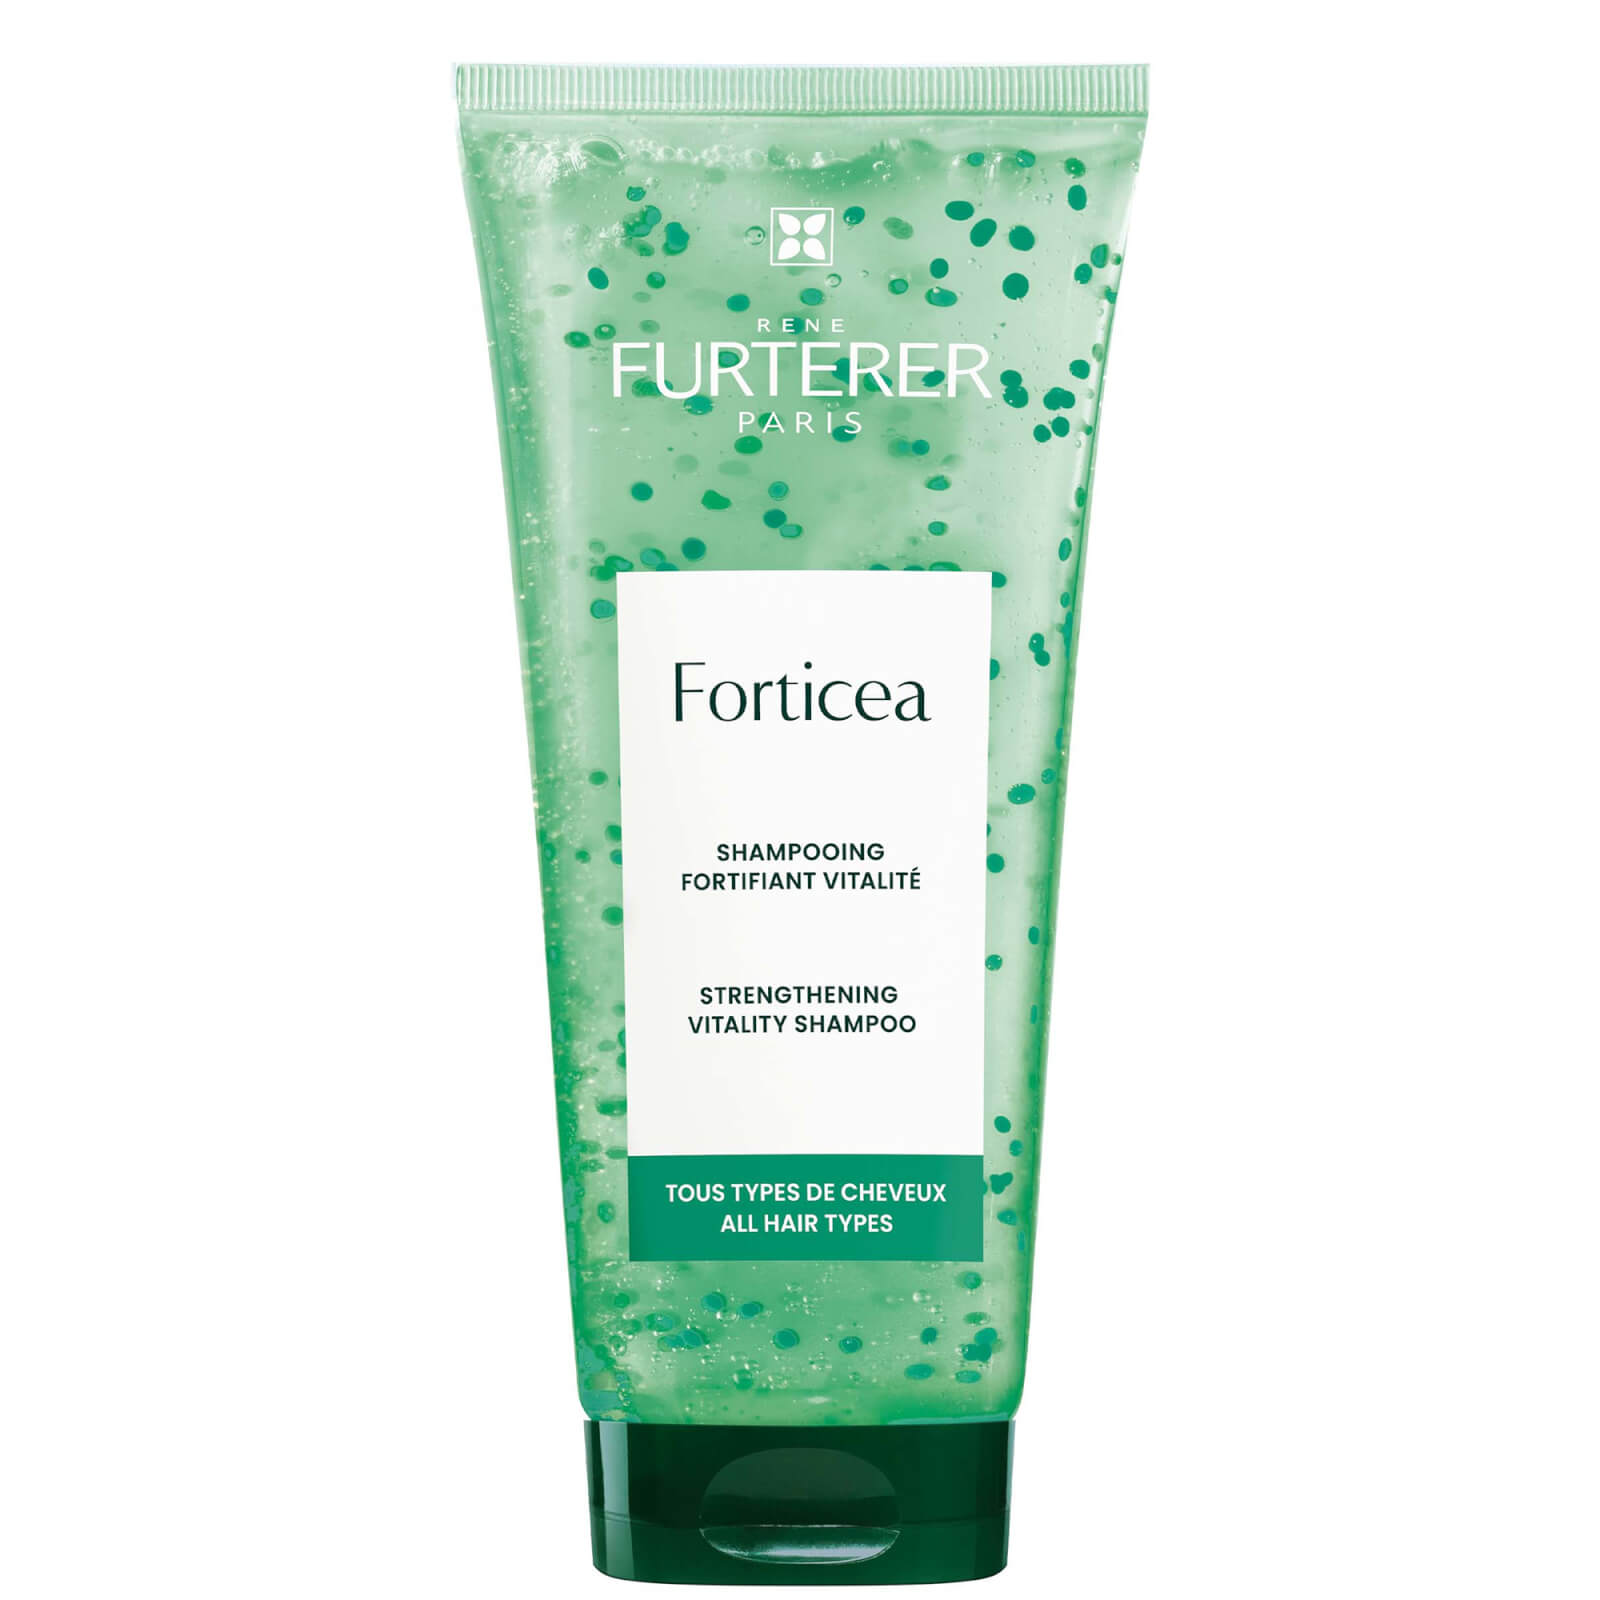 René Furterer Forticea Strengthening Vitality Shampoo 6.7 oz product